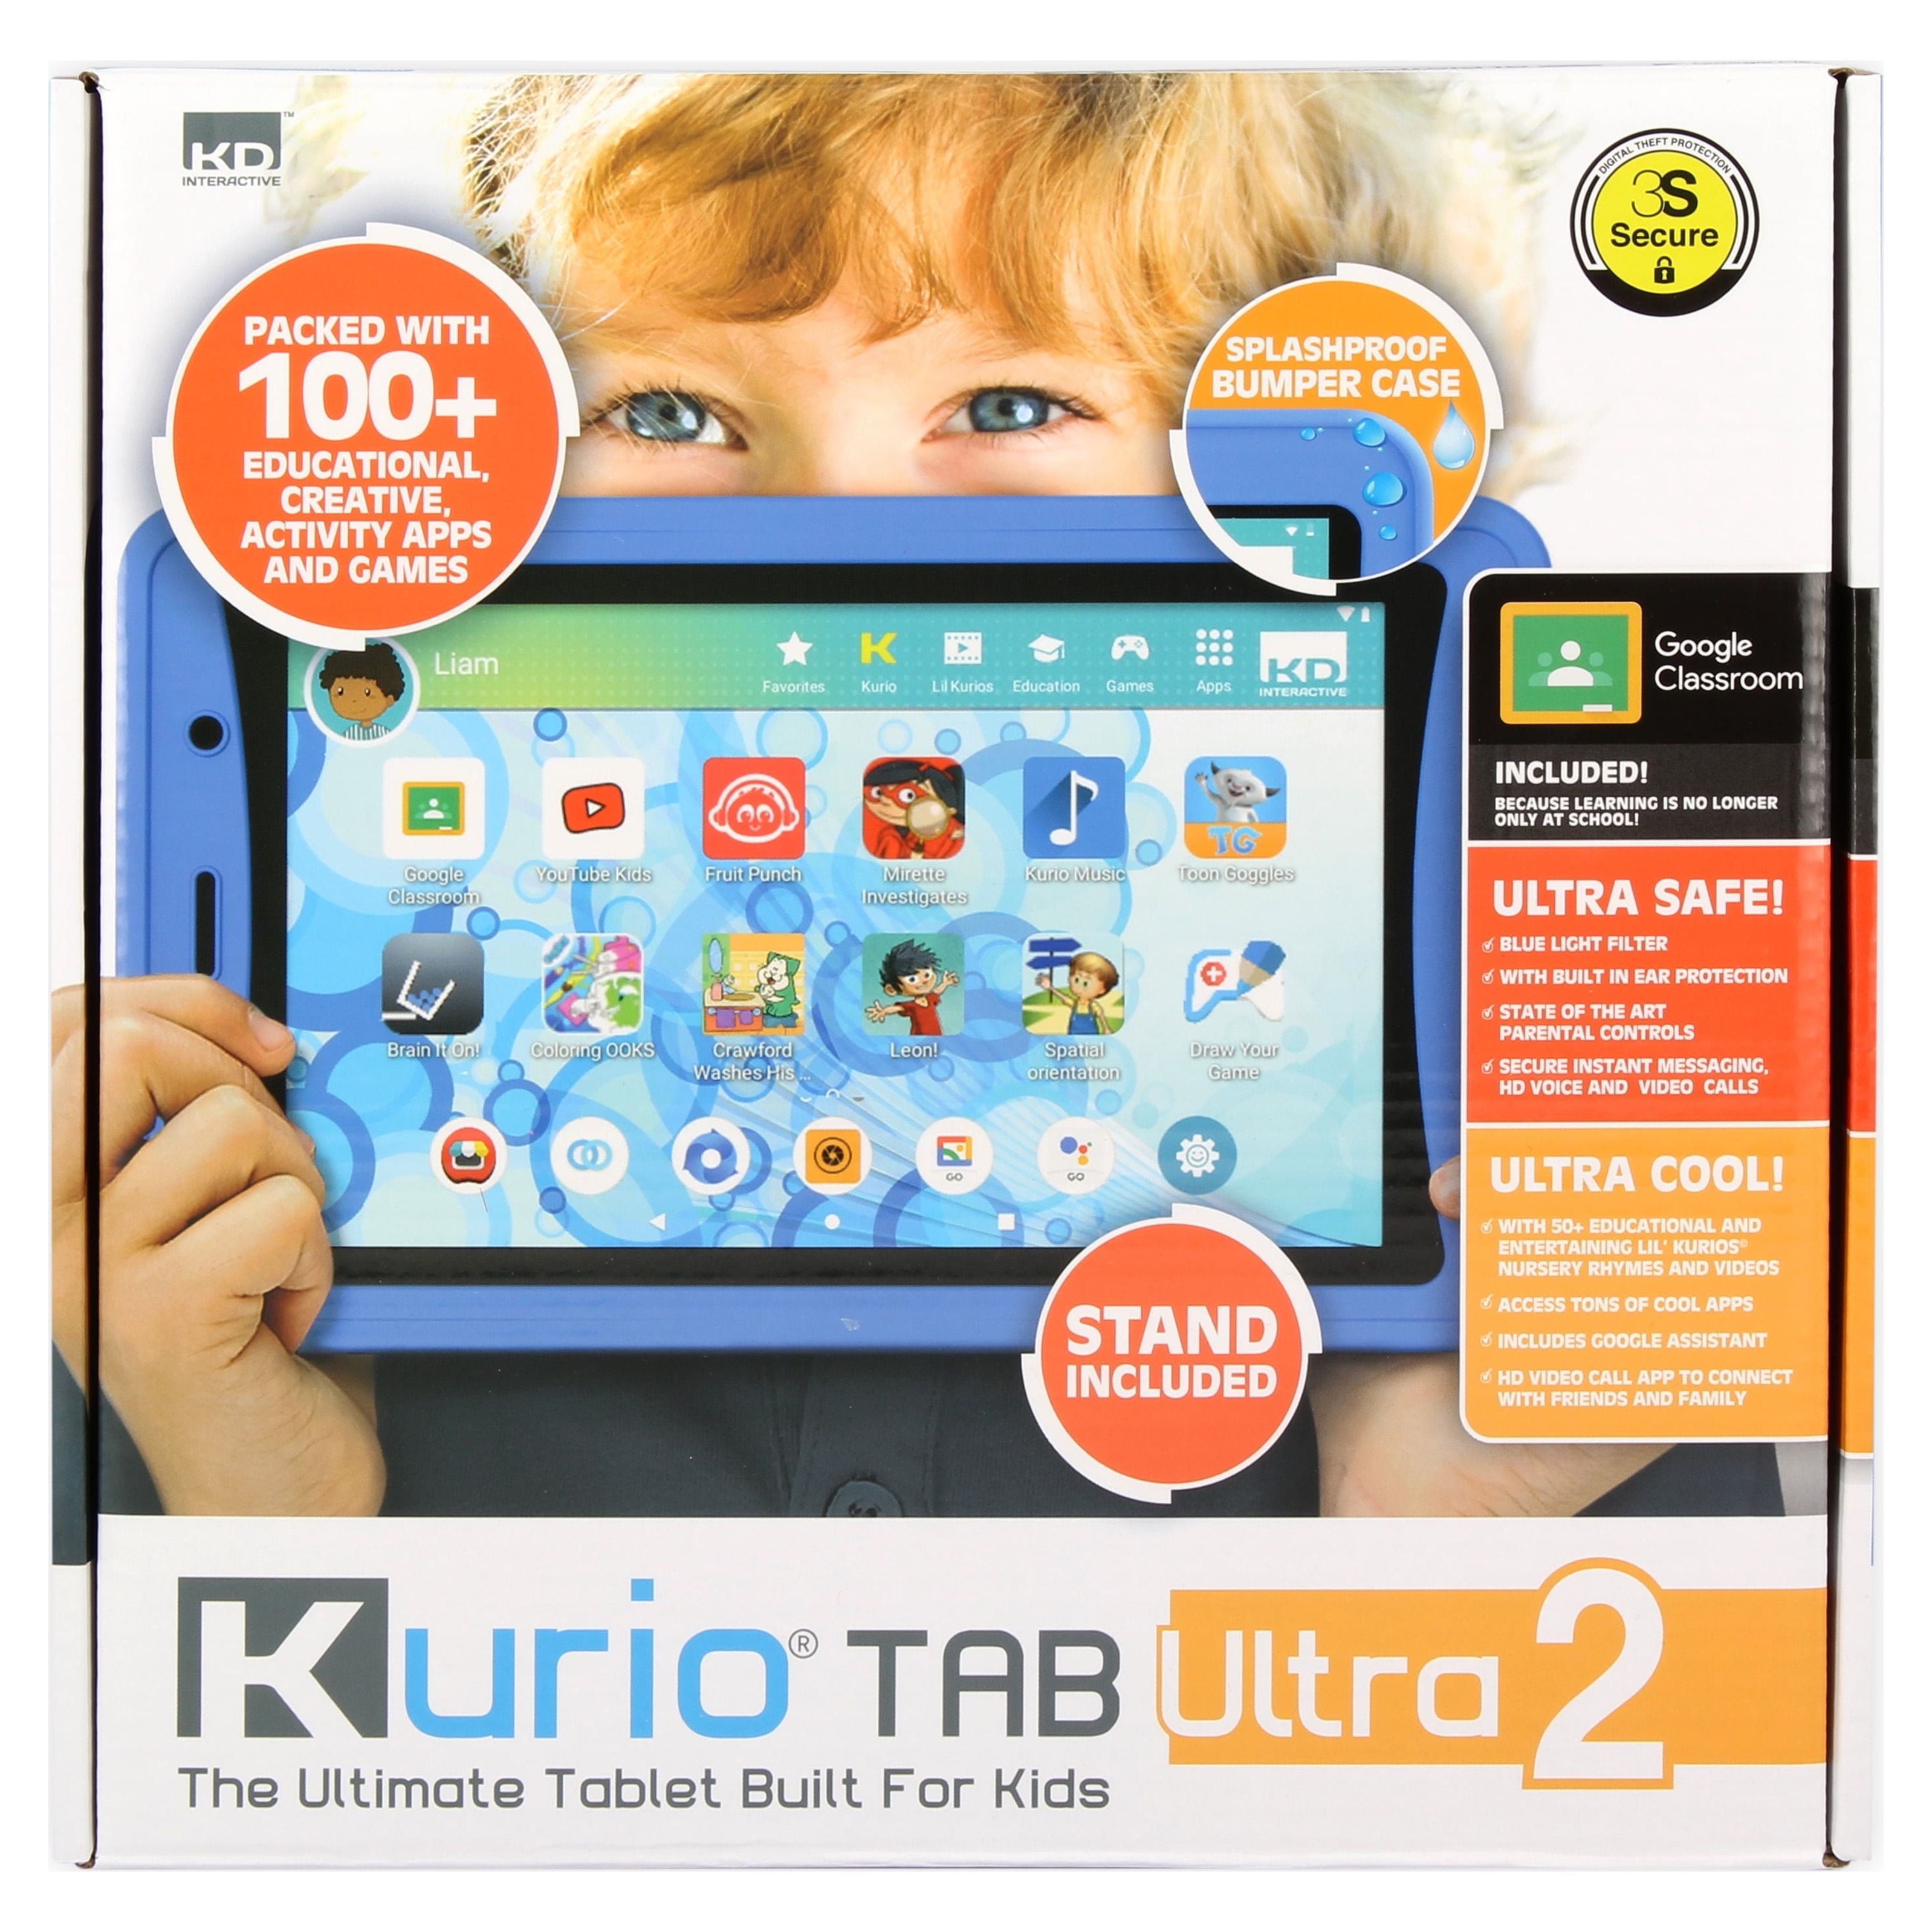 Kurio Tab 2 review - Tech Advisor